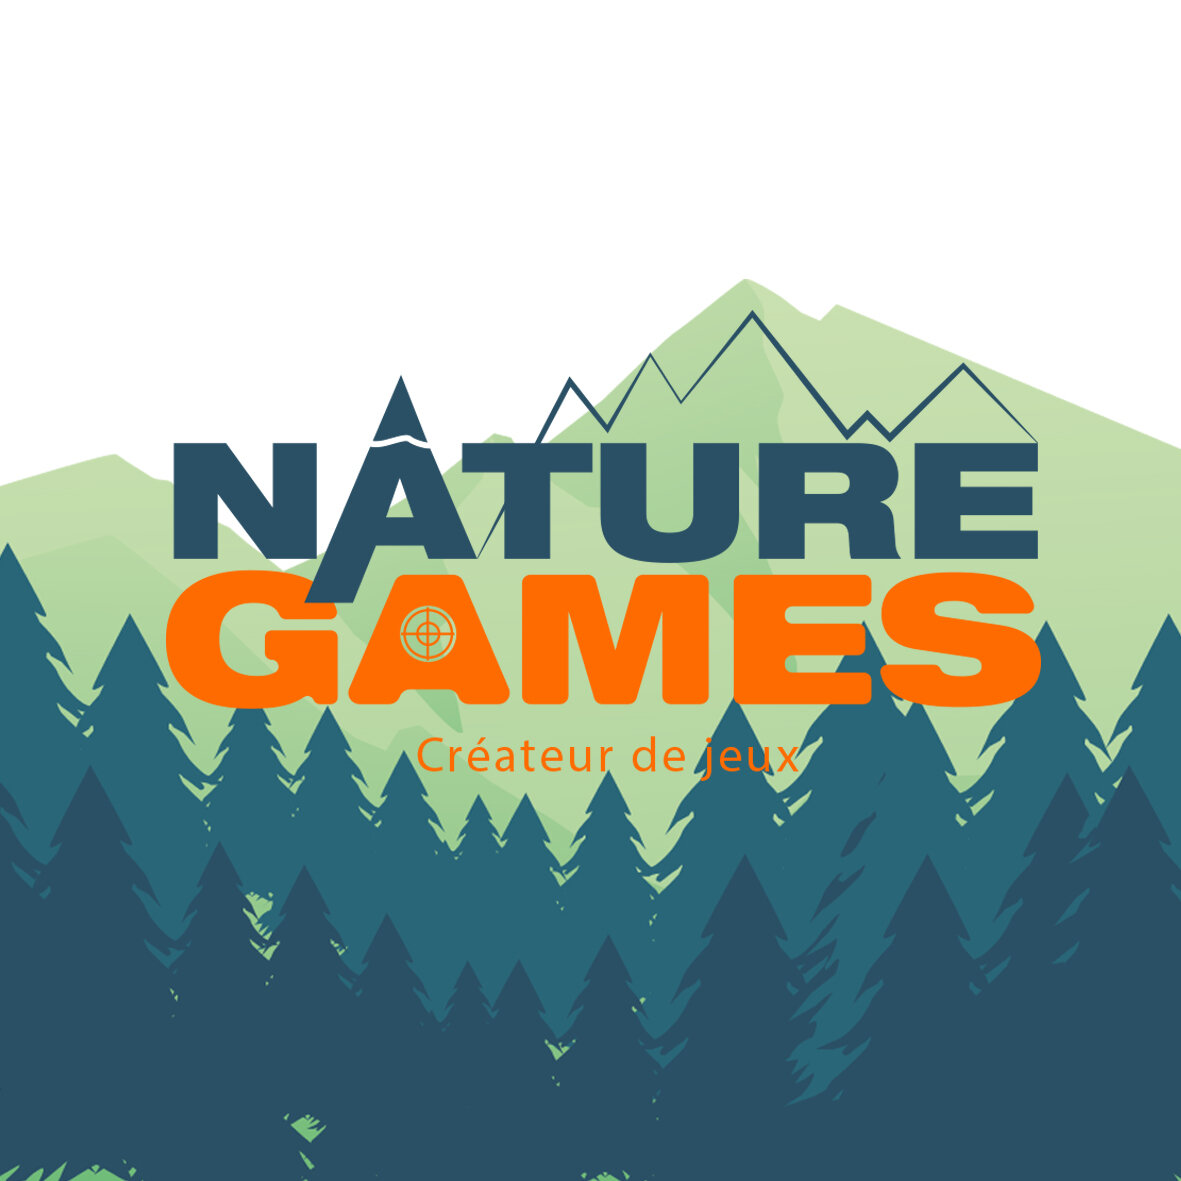 Natural games